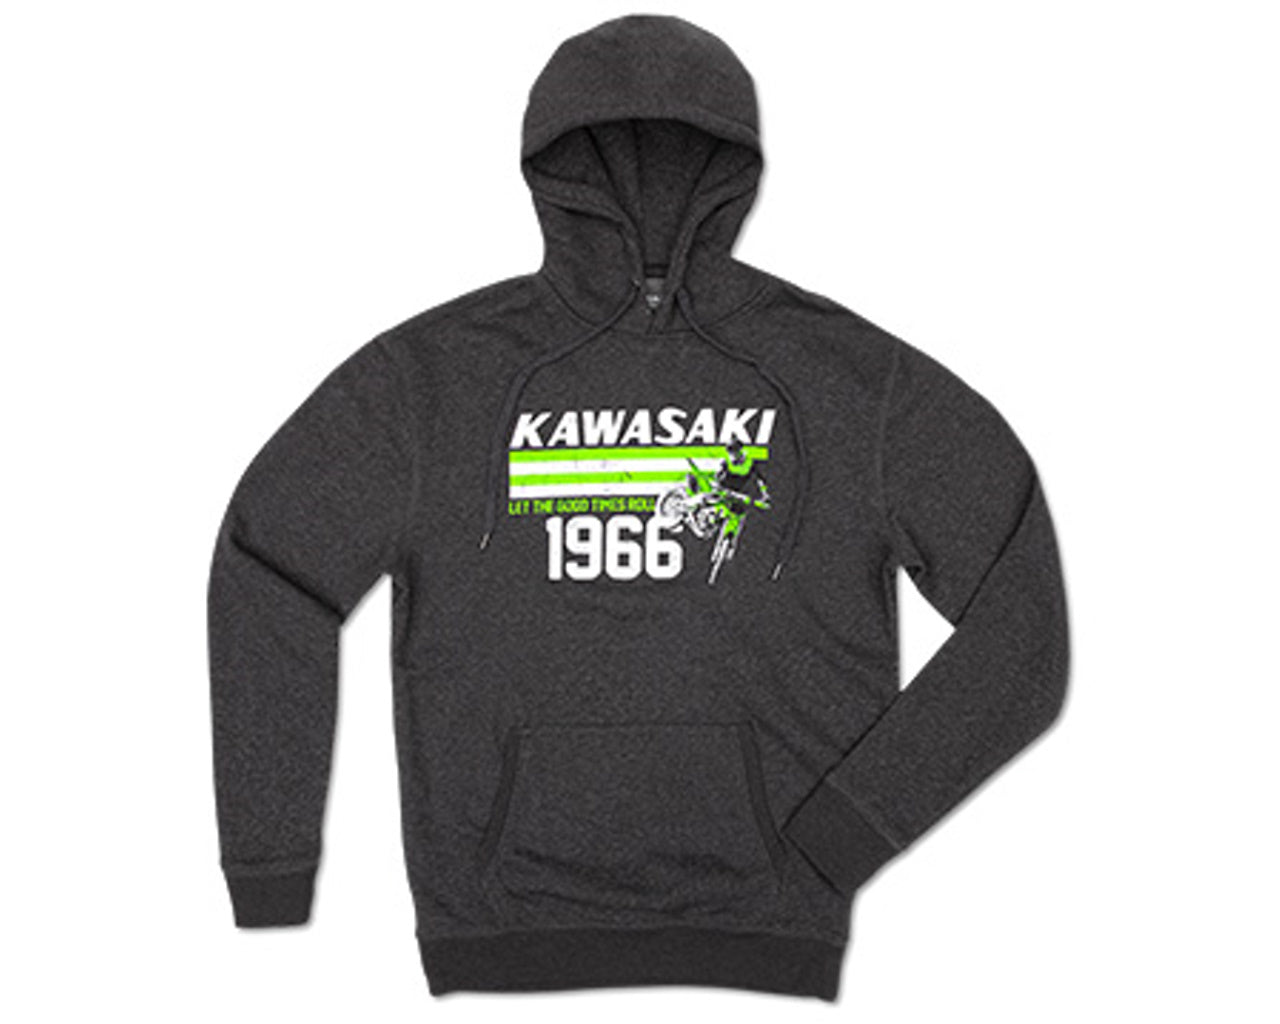 Kawasaki 1966 Heritage Let The Good Times Roll Gray Hoodie Sweatshirt 